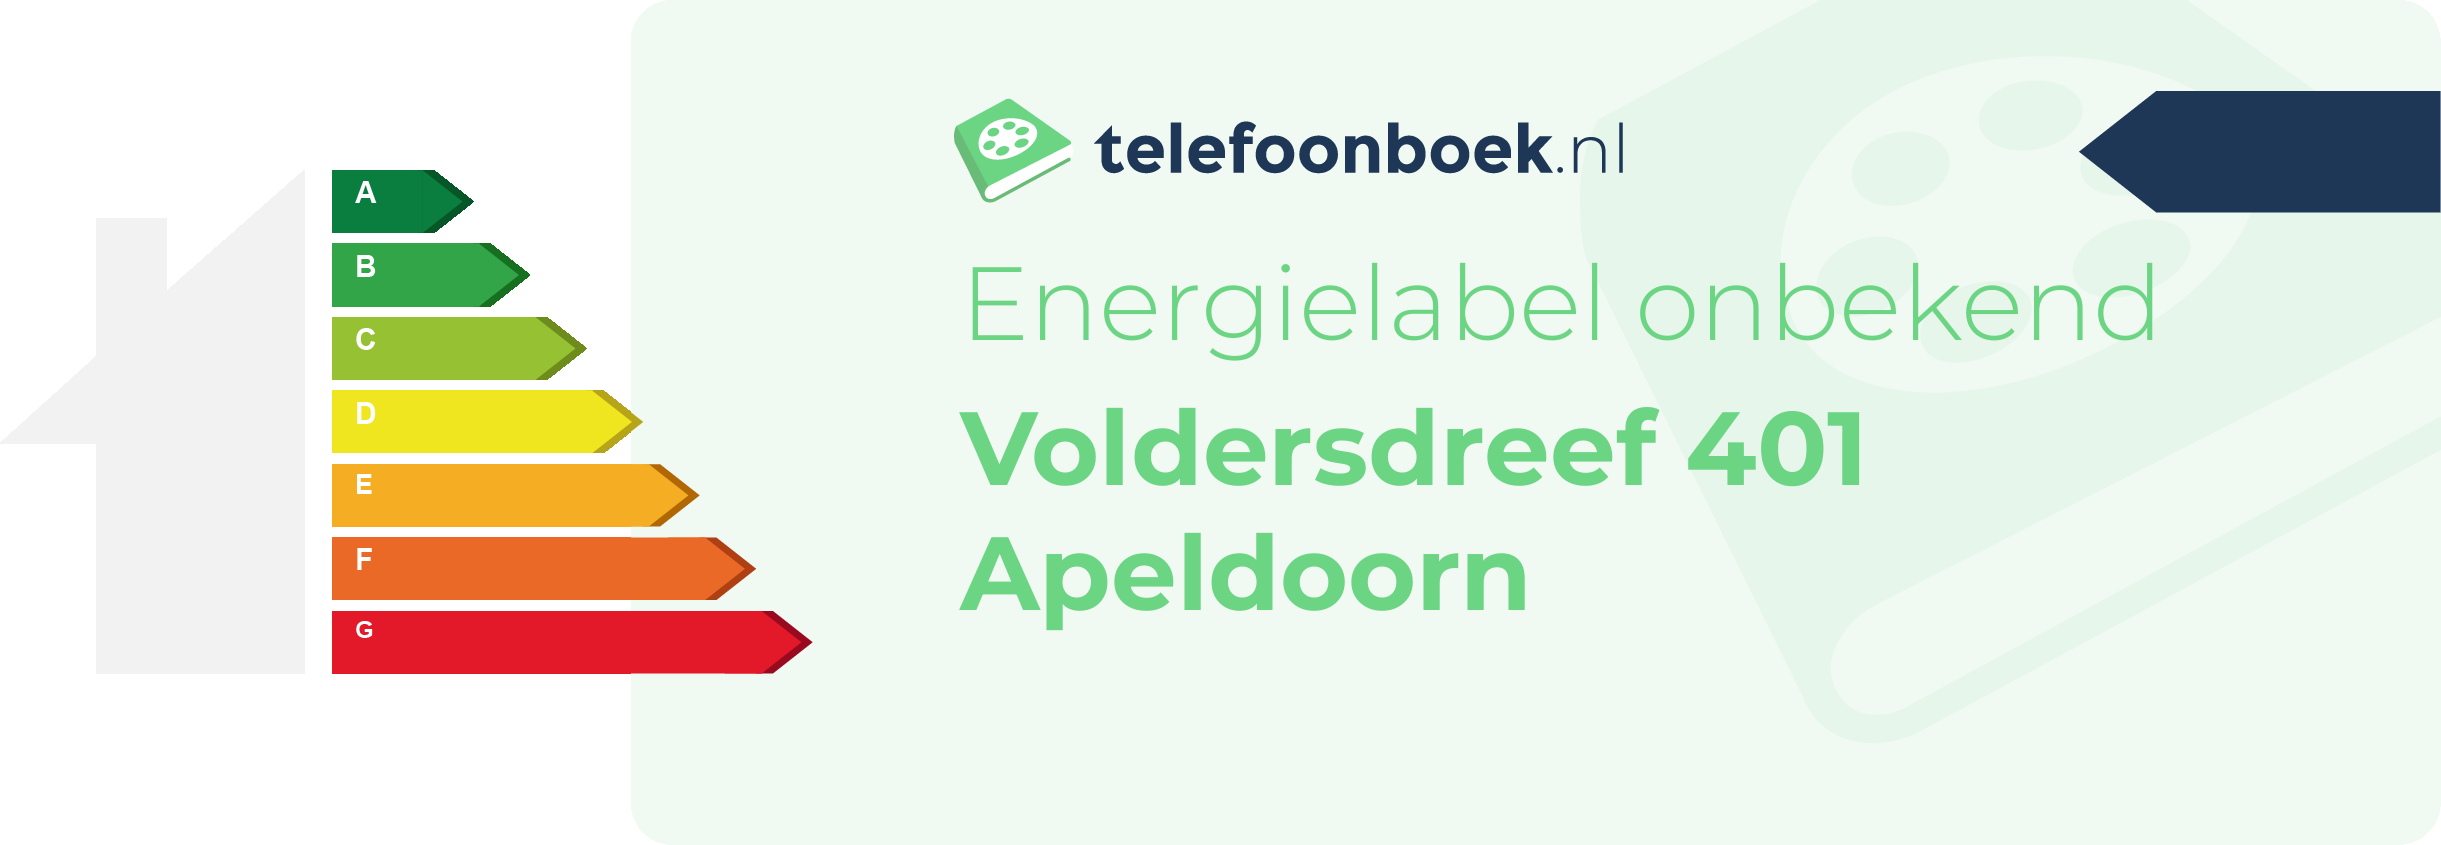 Energielabel Voldersdreef 401 Apeldoorn